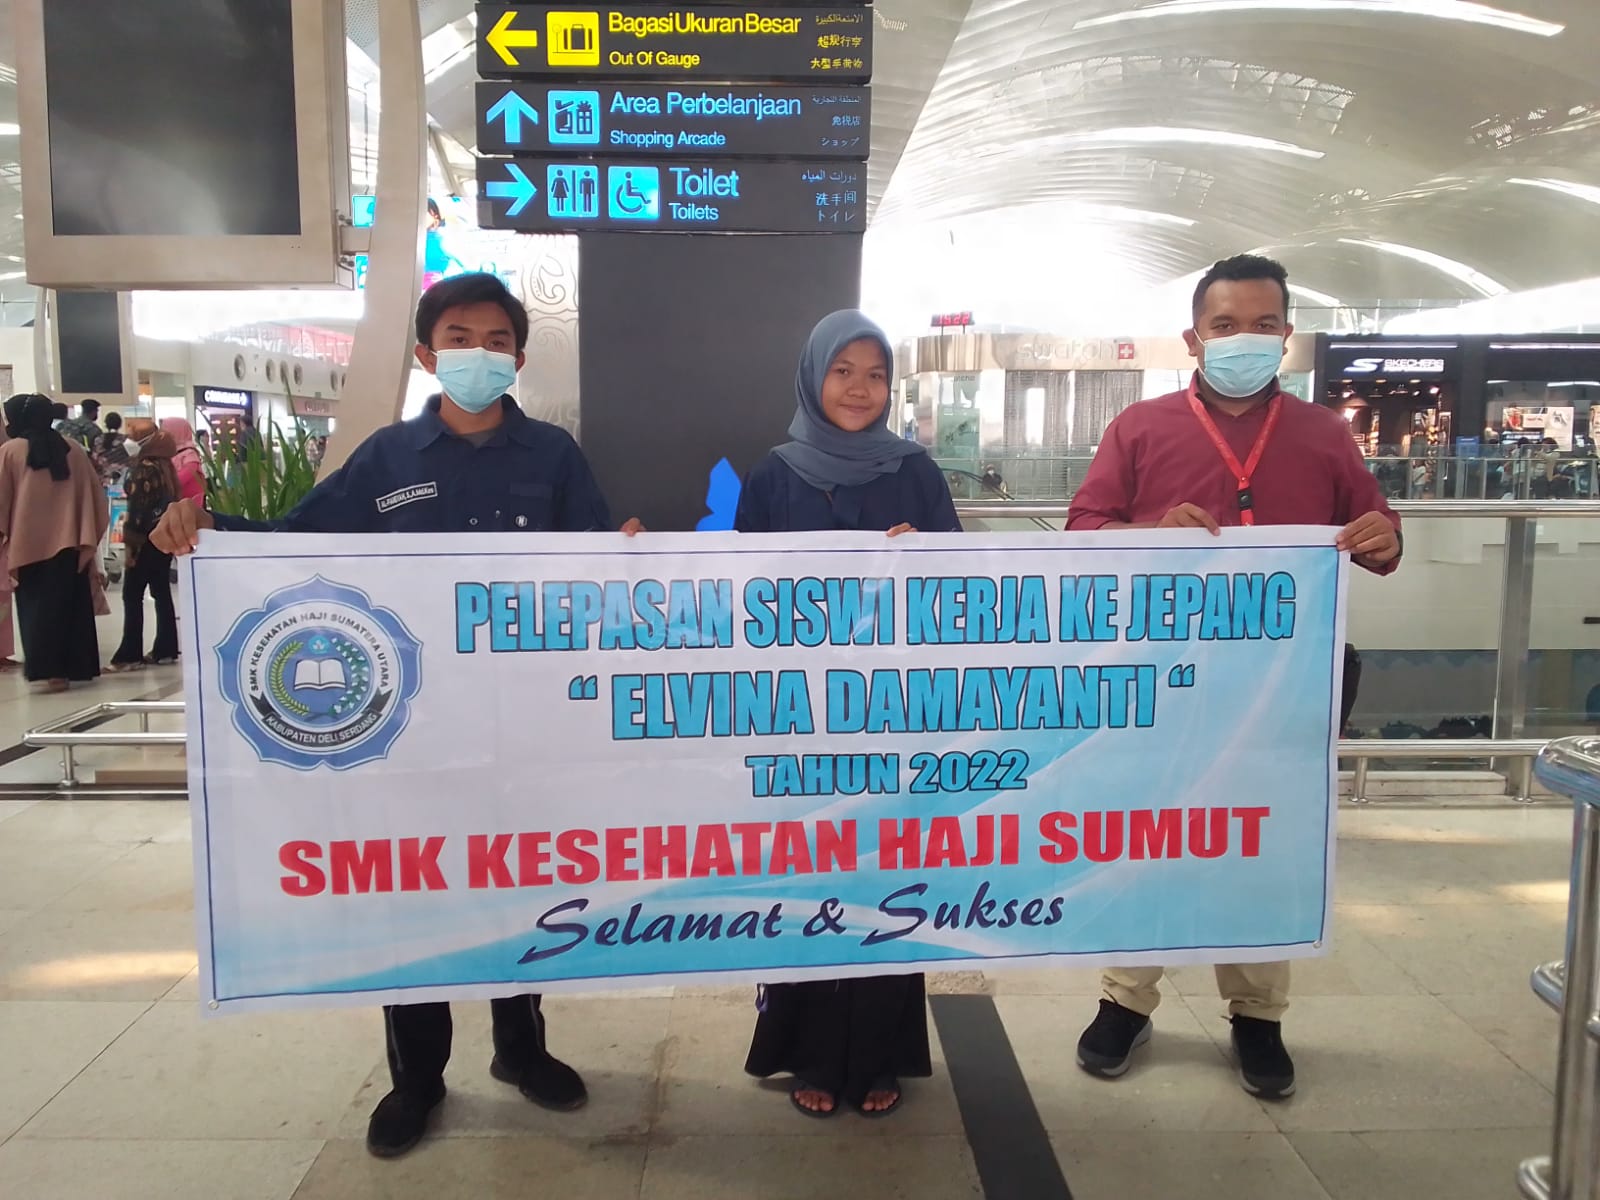 SMK Kesehatan Haji Sumatera Utara Go To Japan